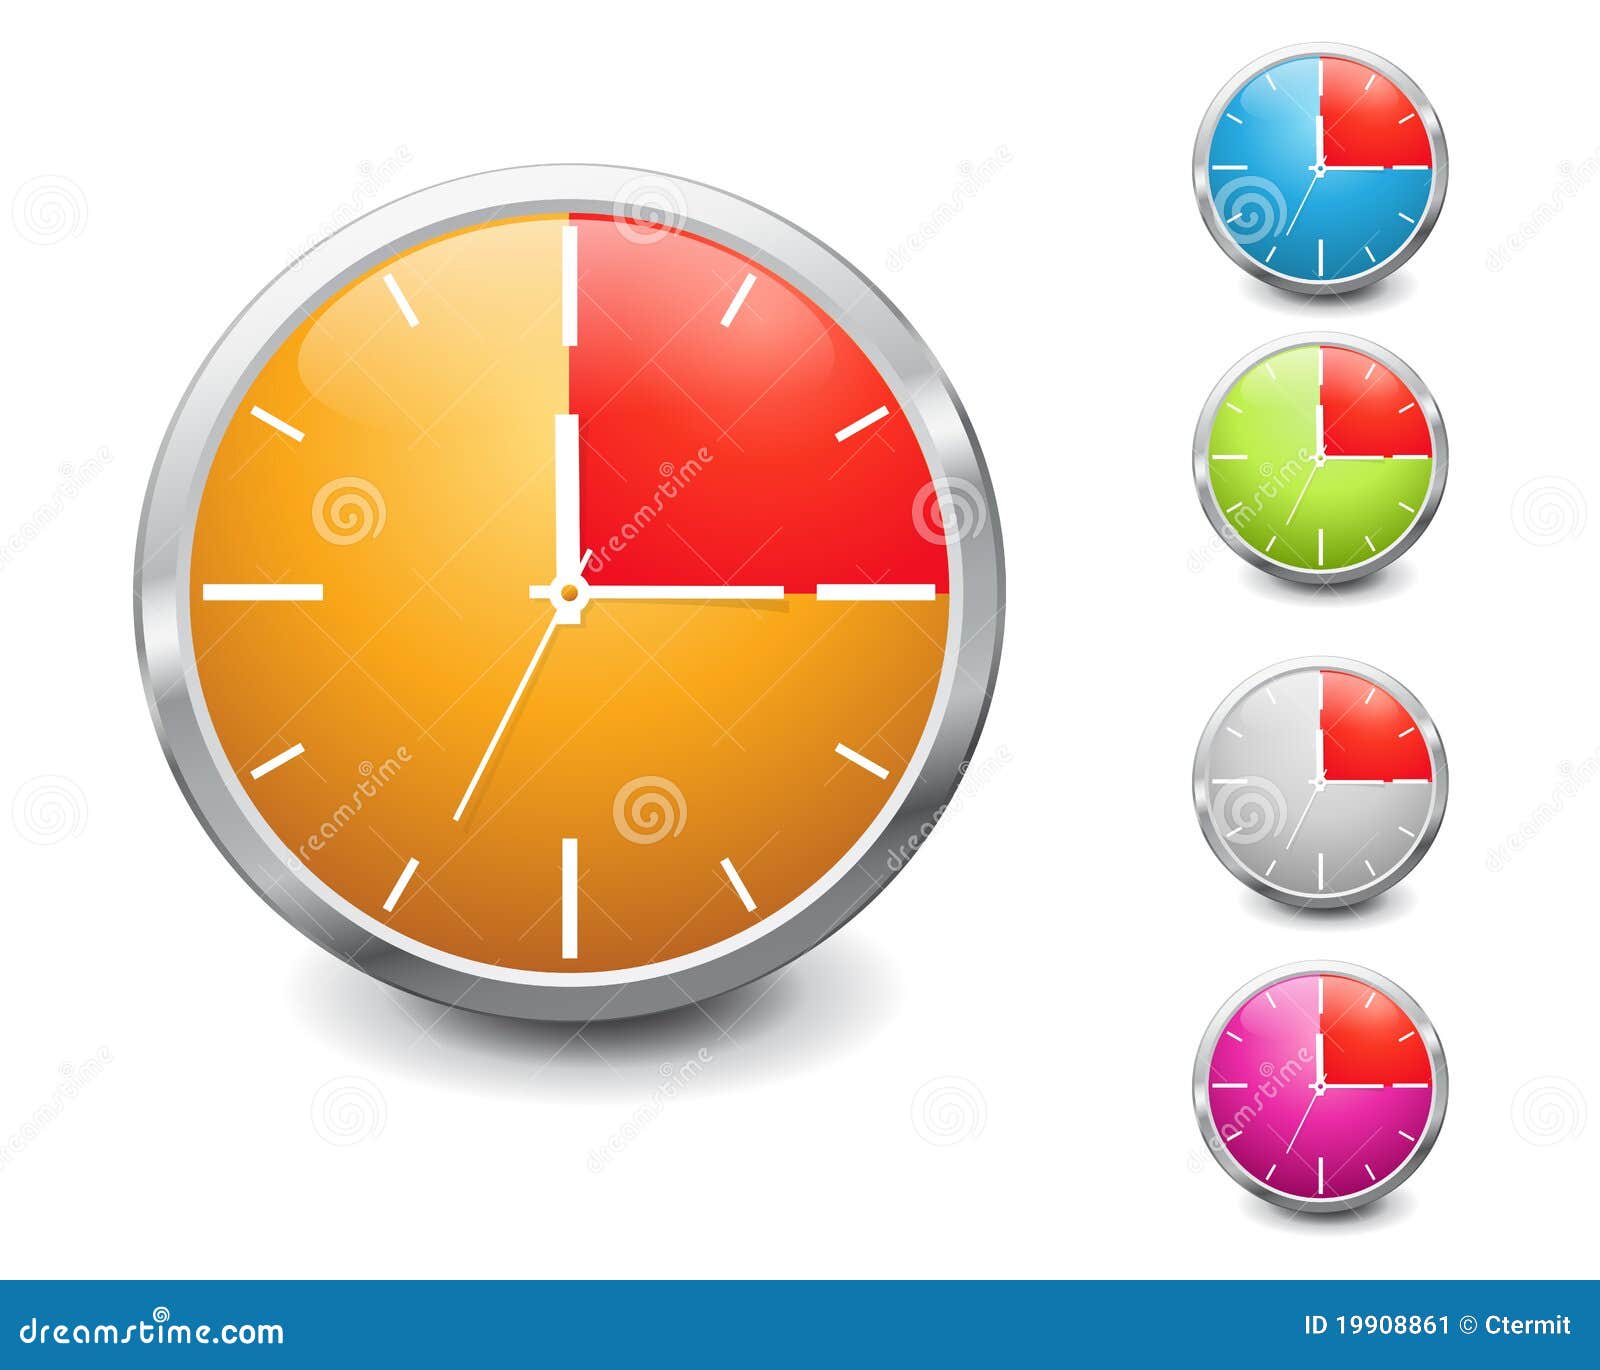 Set Of Multicolored Shiny 15 Minutes Timer. Stock Image - Image: 19908861